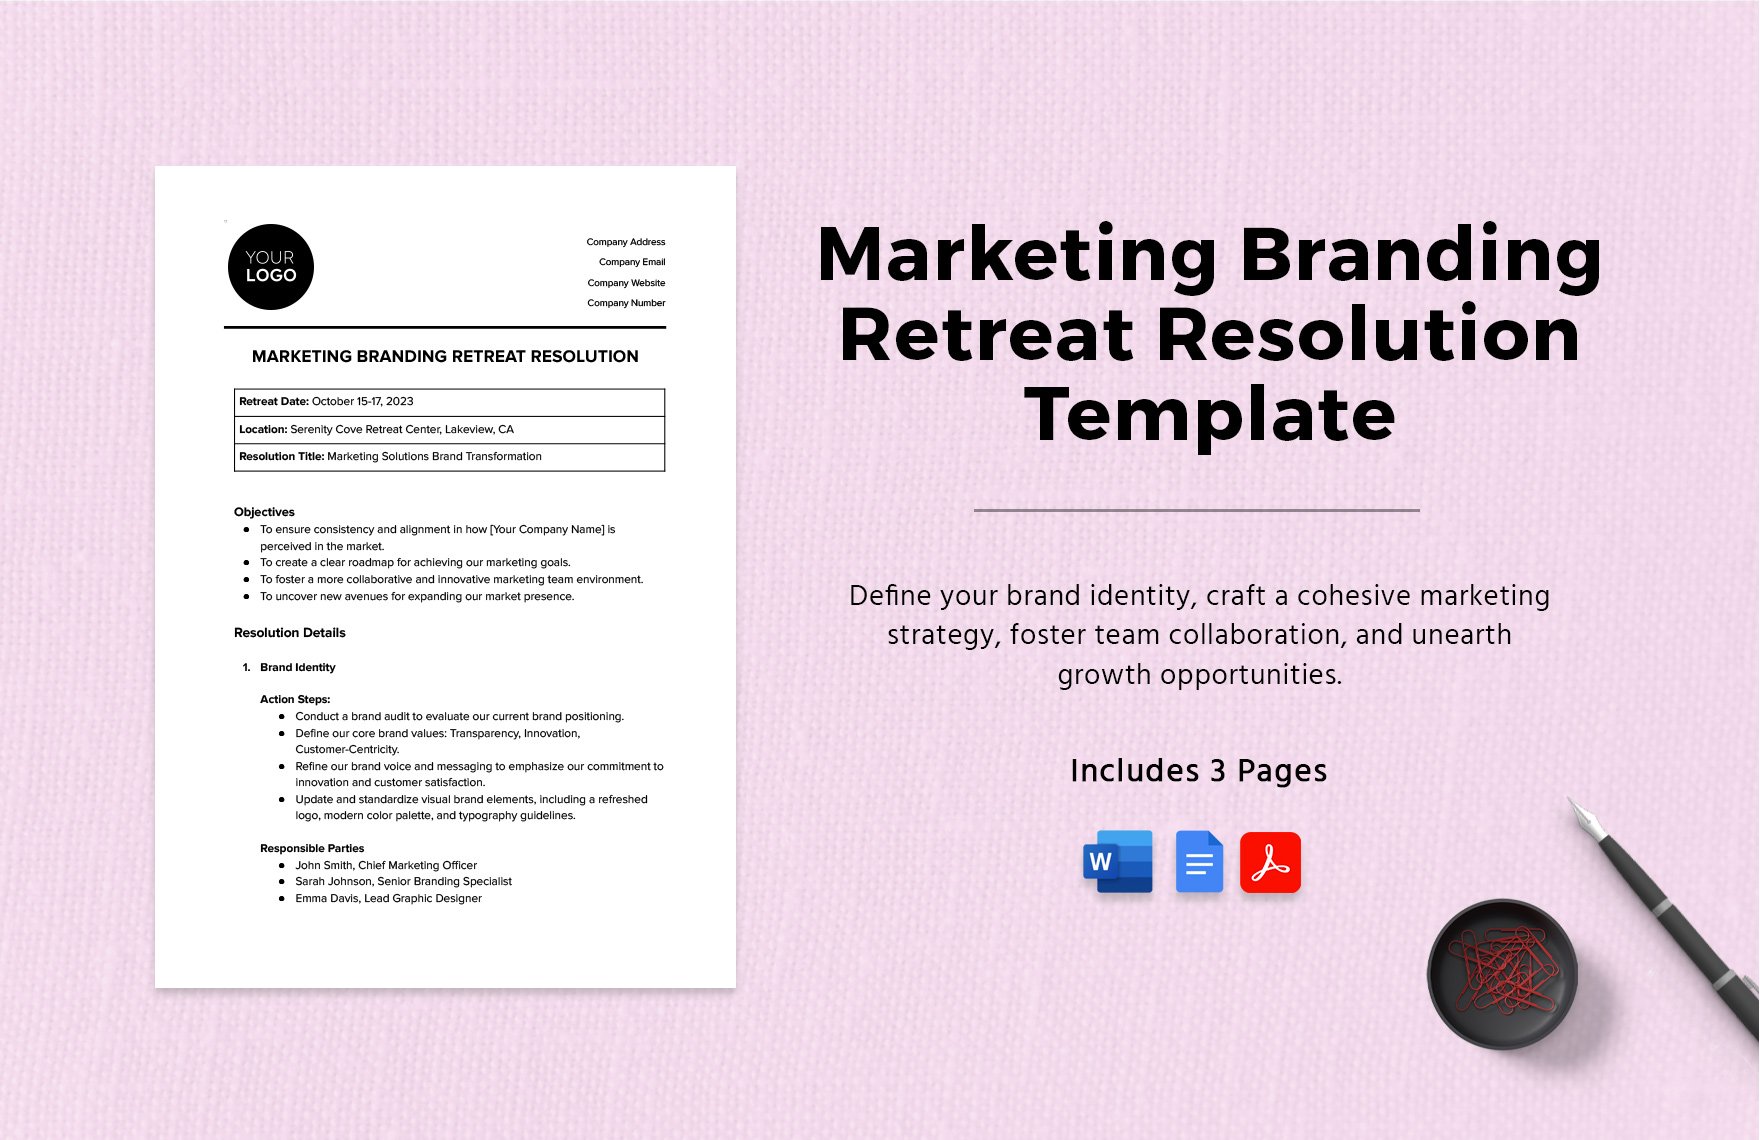 Marketing Branding Retreat Resolution Template